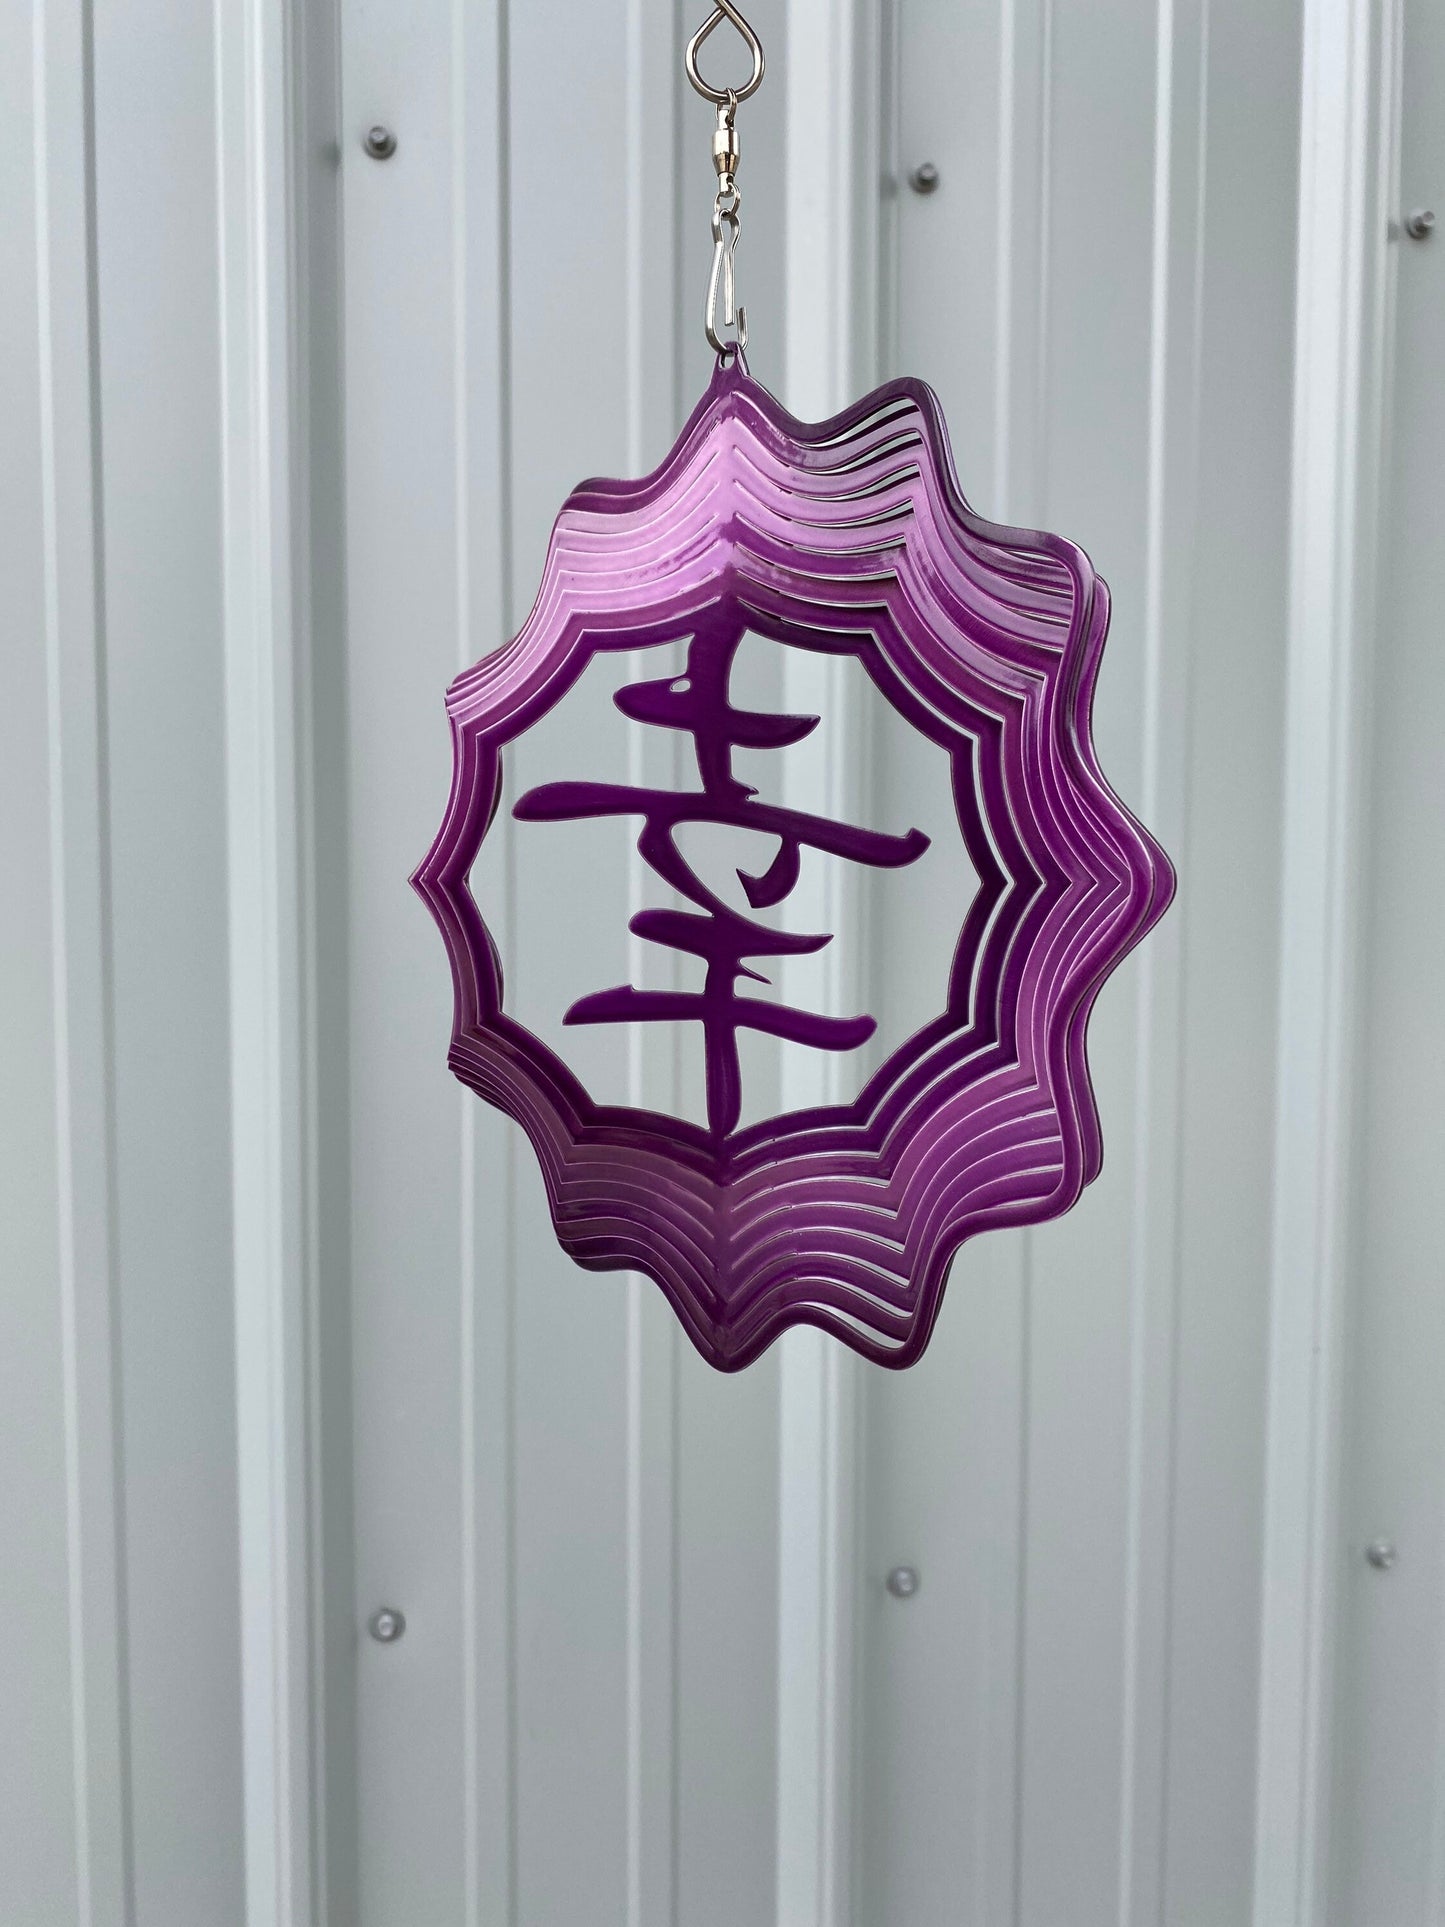 Japanese happiness symbol metal art wind spinner, gift for gardener, garden decorations, patio decorations